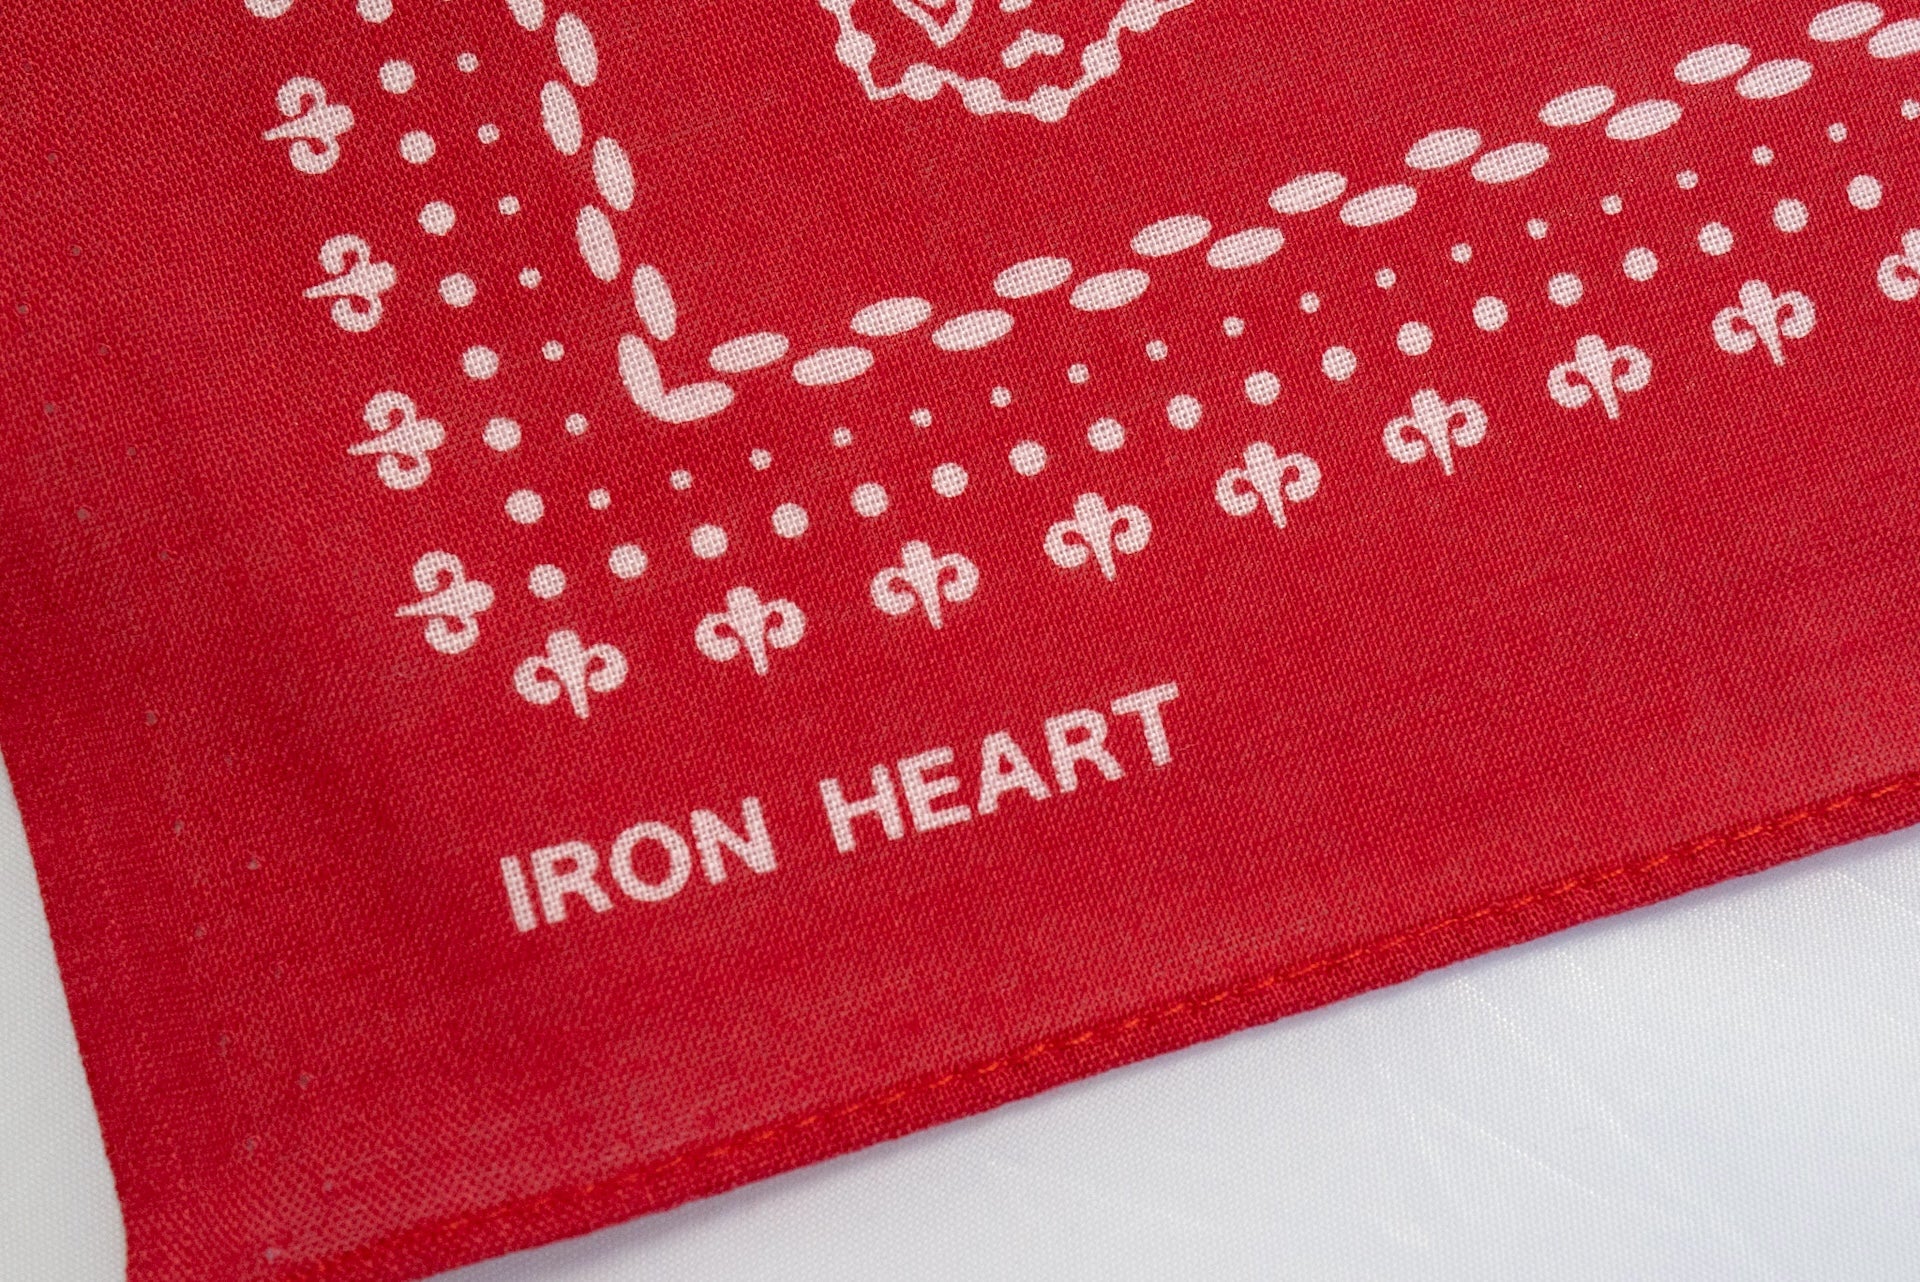 Iron Heart "Bell" Print Bandana (Red)